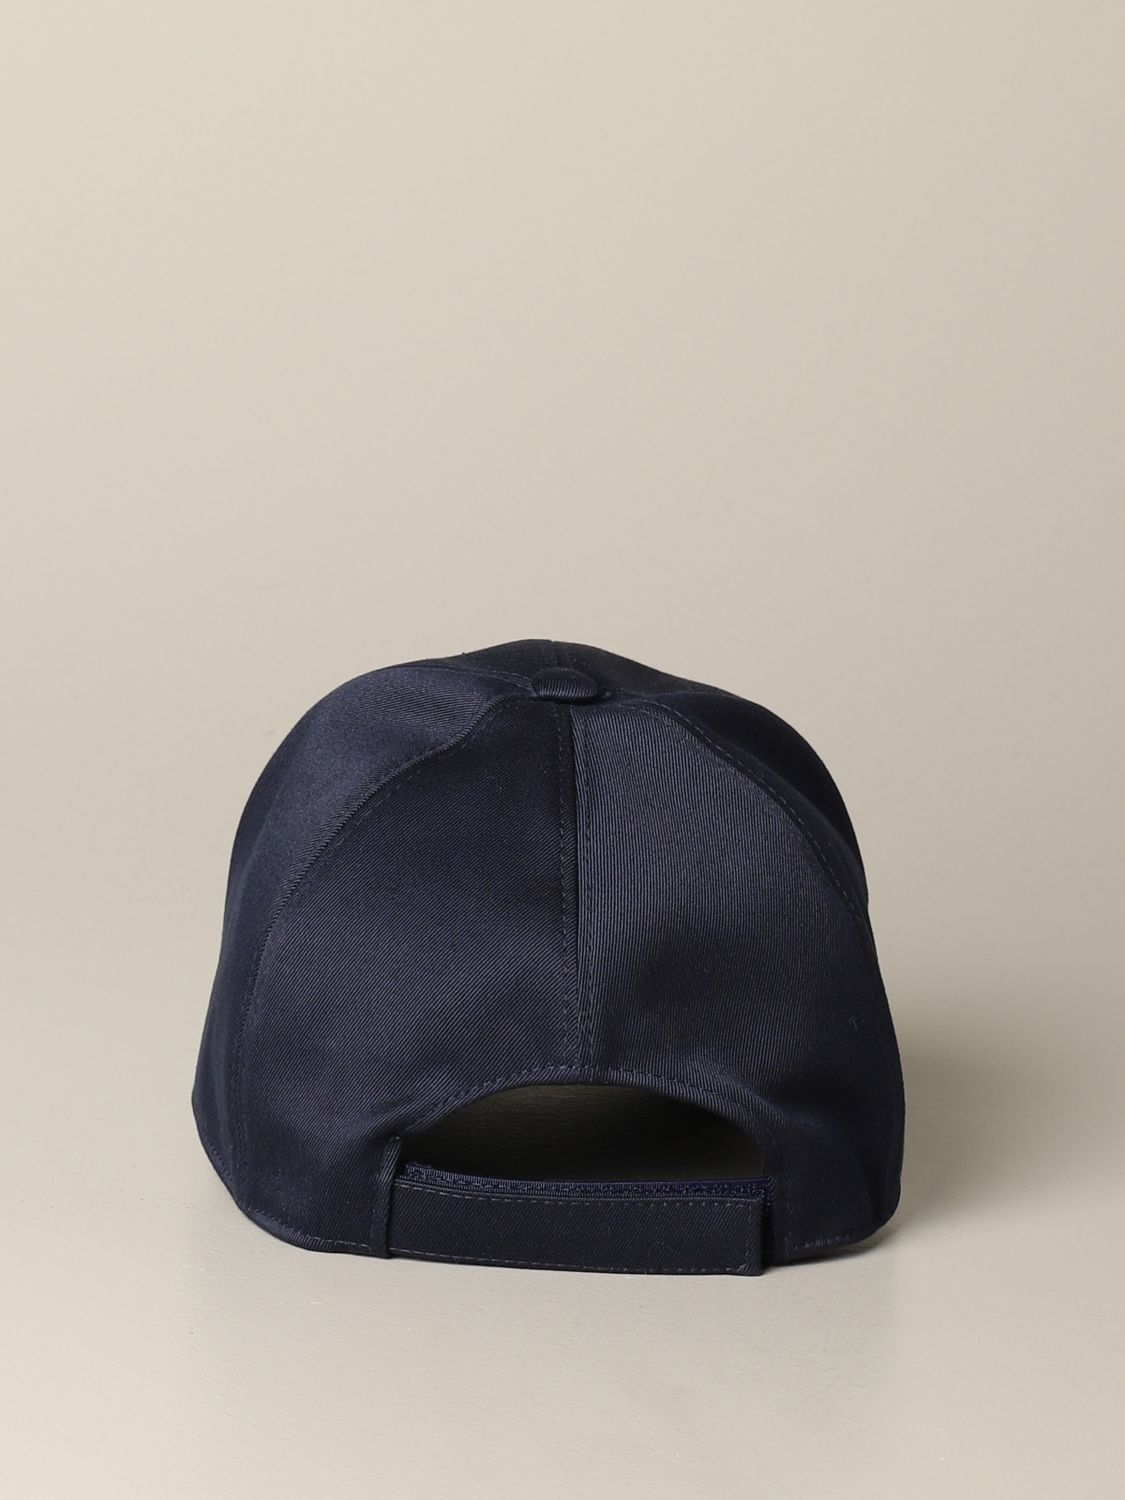 PRADA: hat with logo - Blue | Prada hat 2HC179 2DB1 online on 